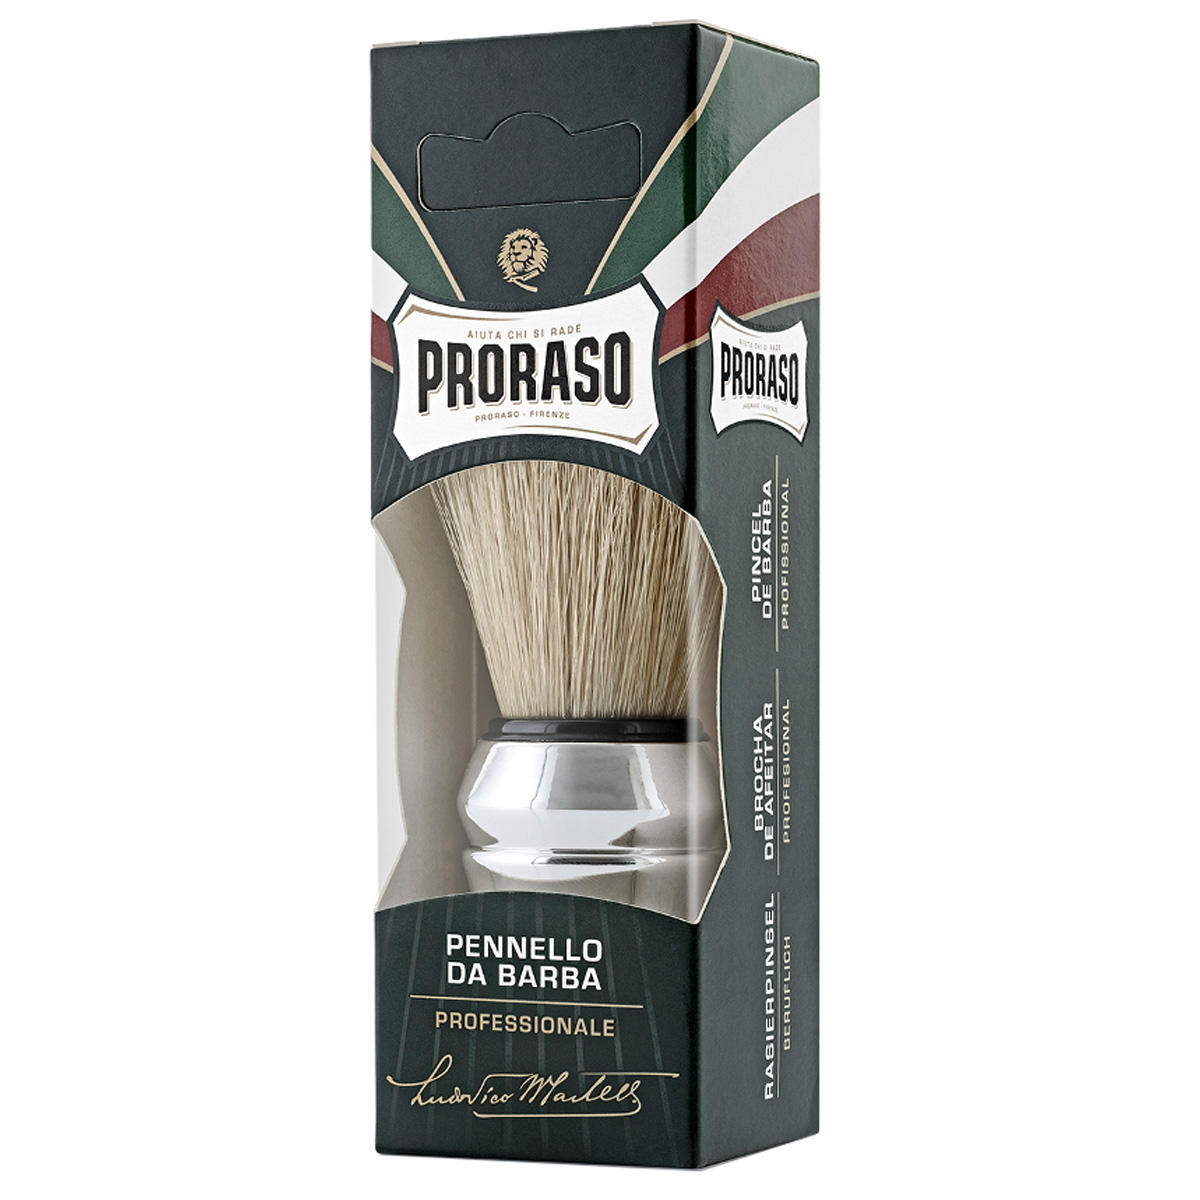 Proraso Shaving Brush  - 1